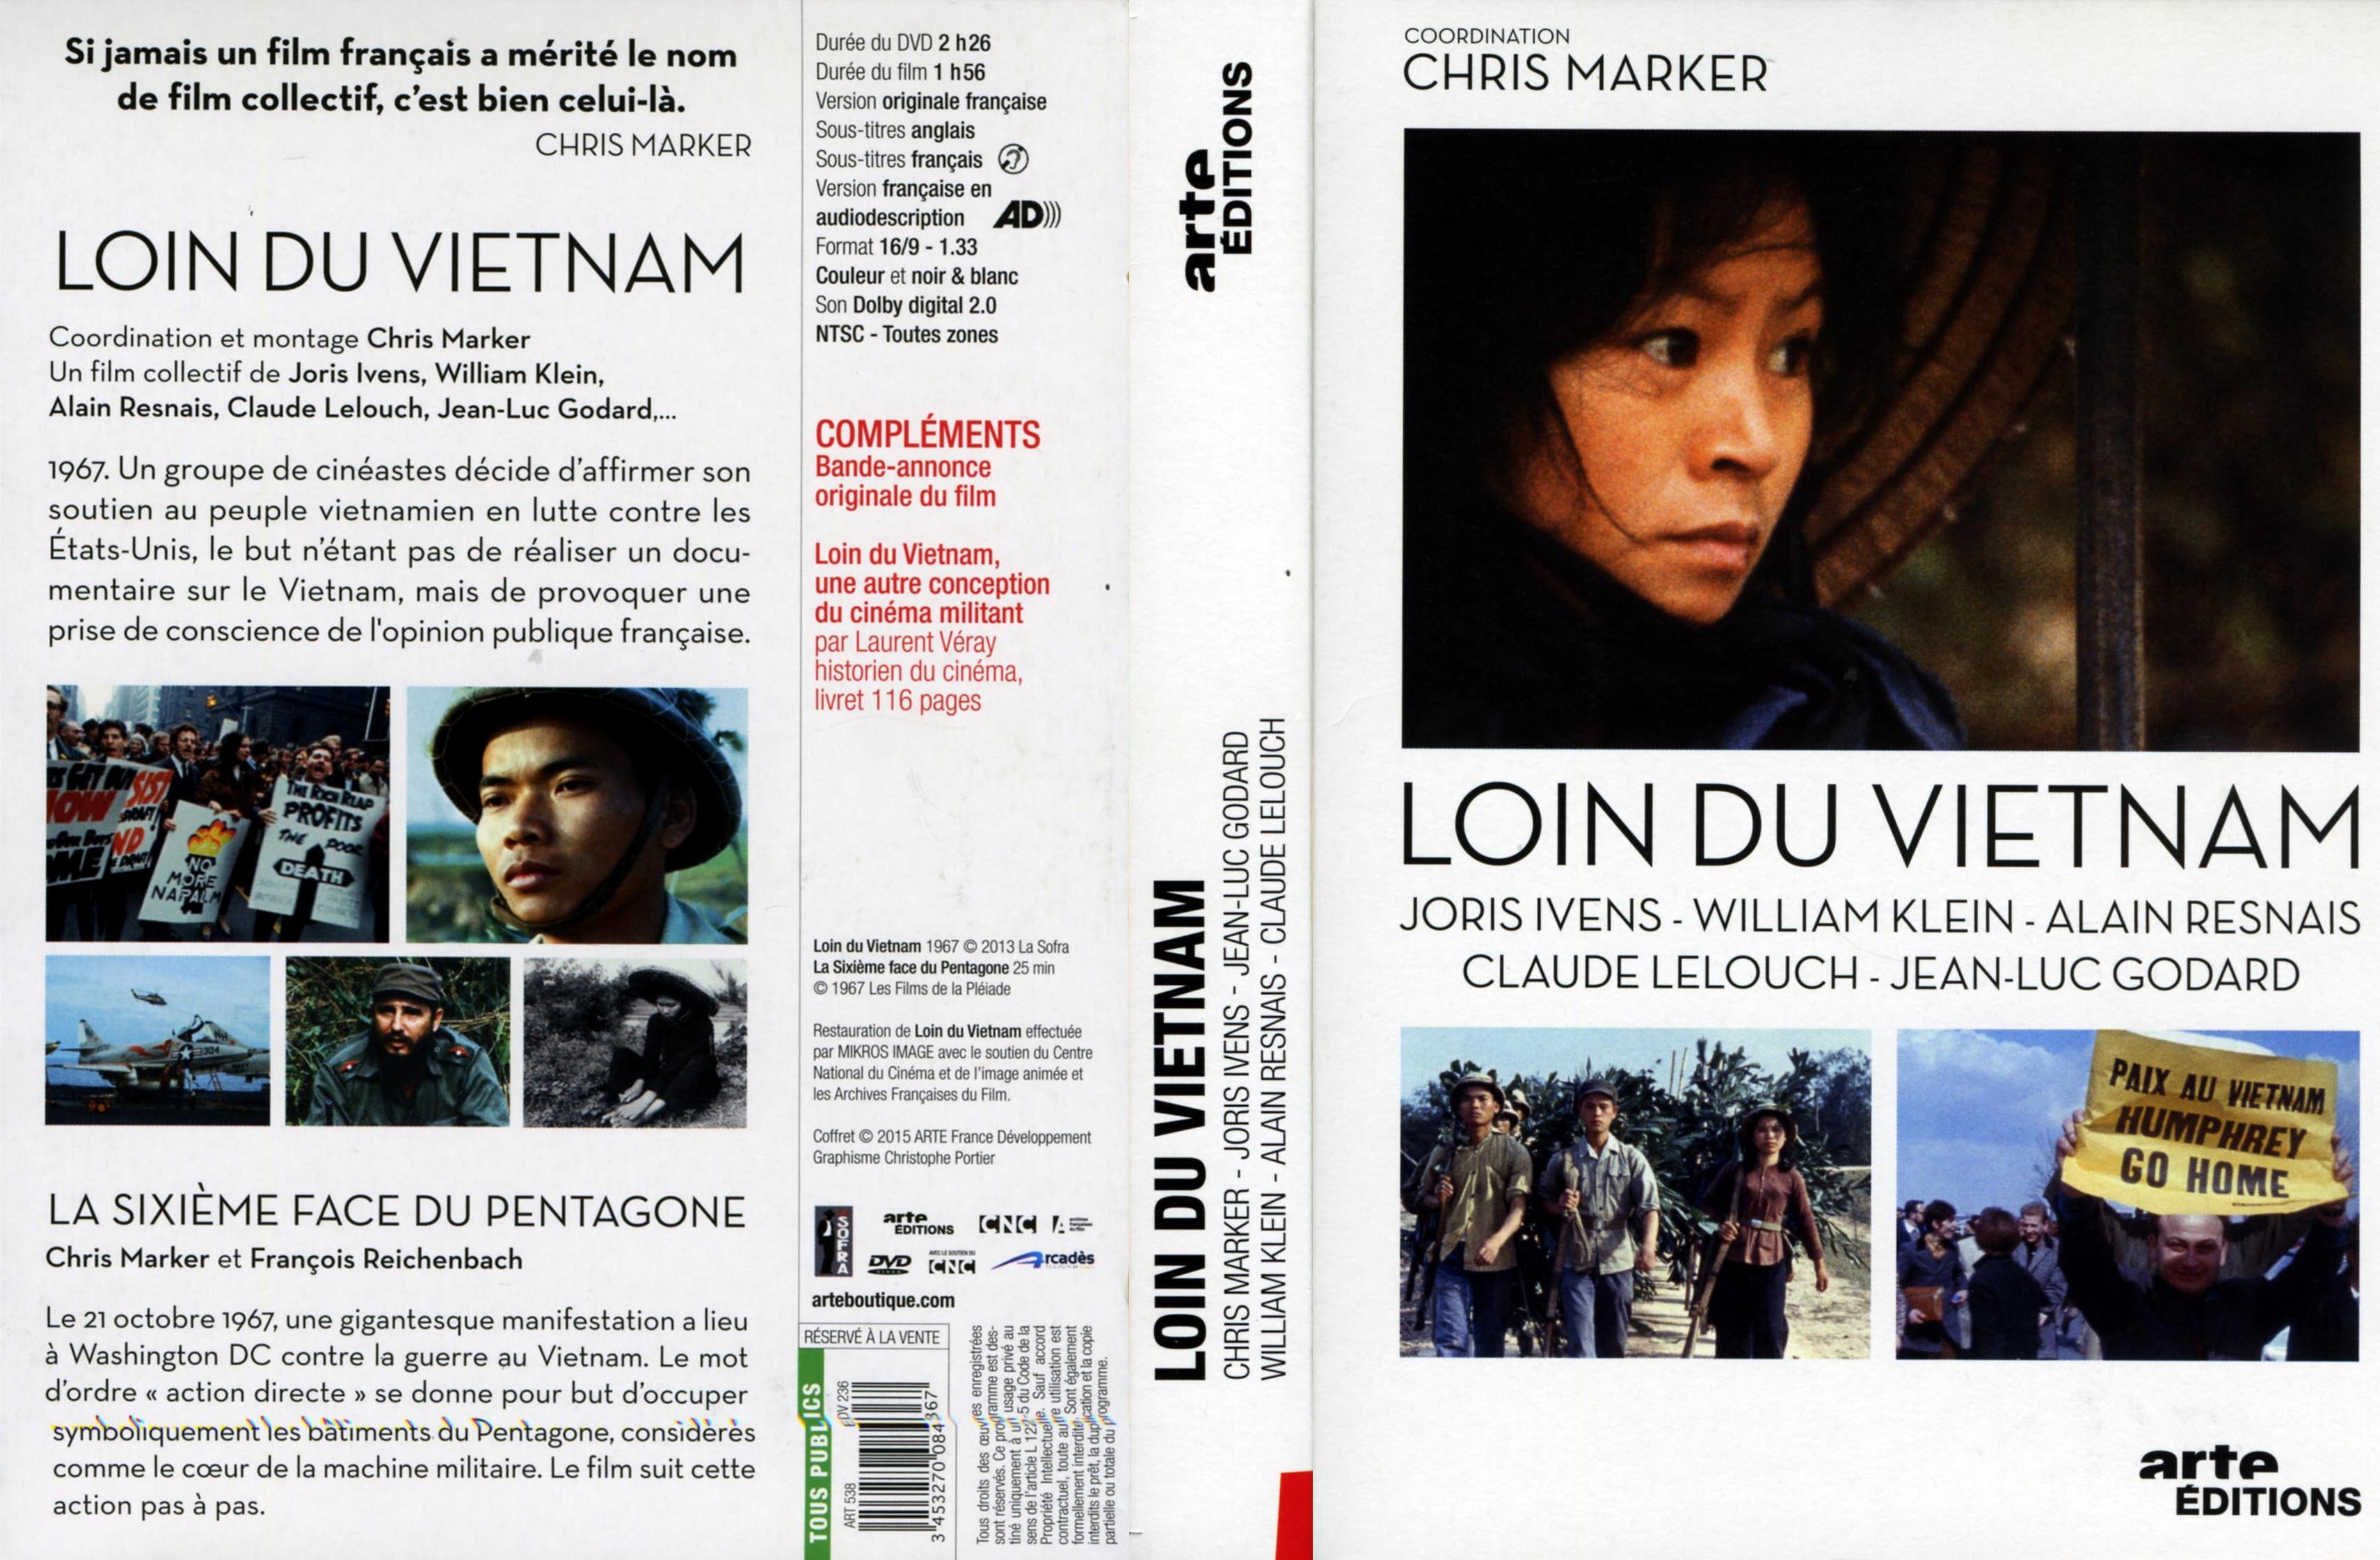 Jaquette DVD Loin du Vietnam